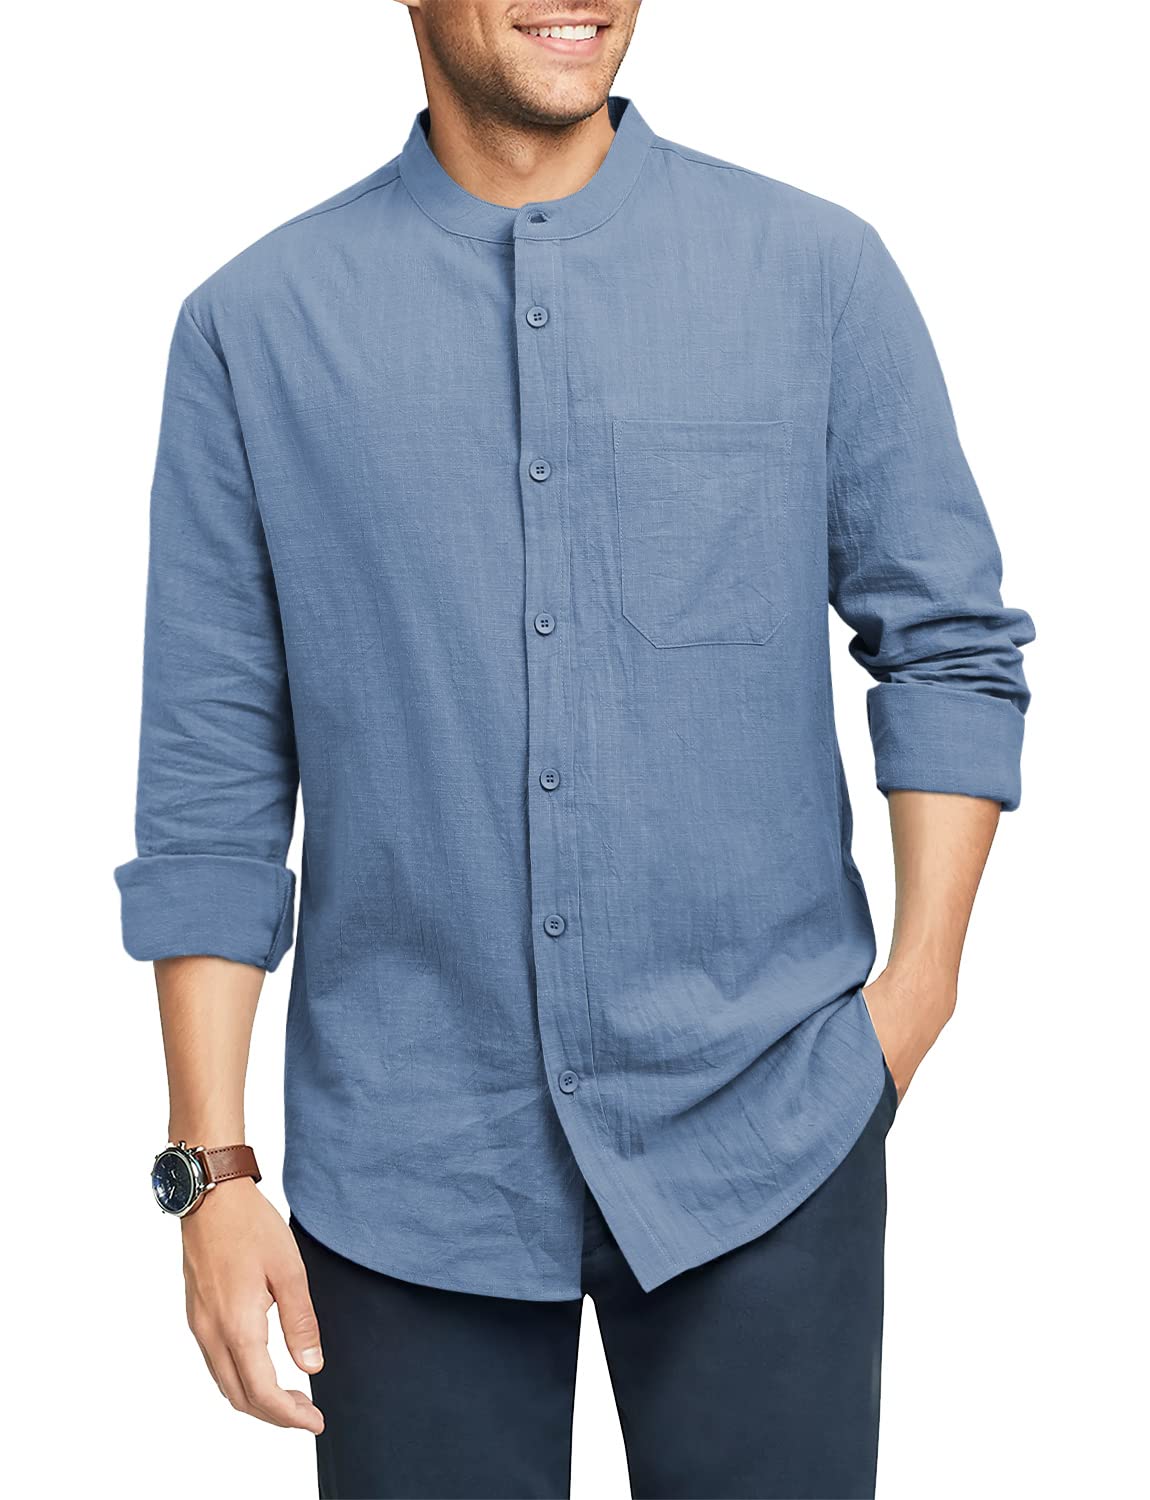 TUREFACE Mens Casual Long Sleeve Shirts Cotton Linen Button Down Regular Fit Beach Shirts